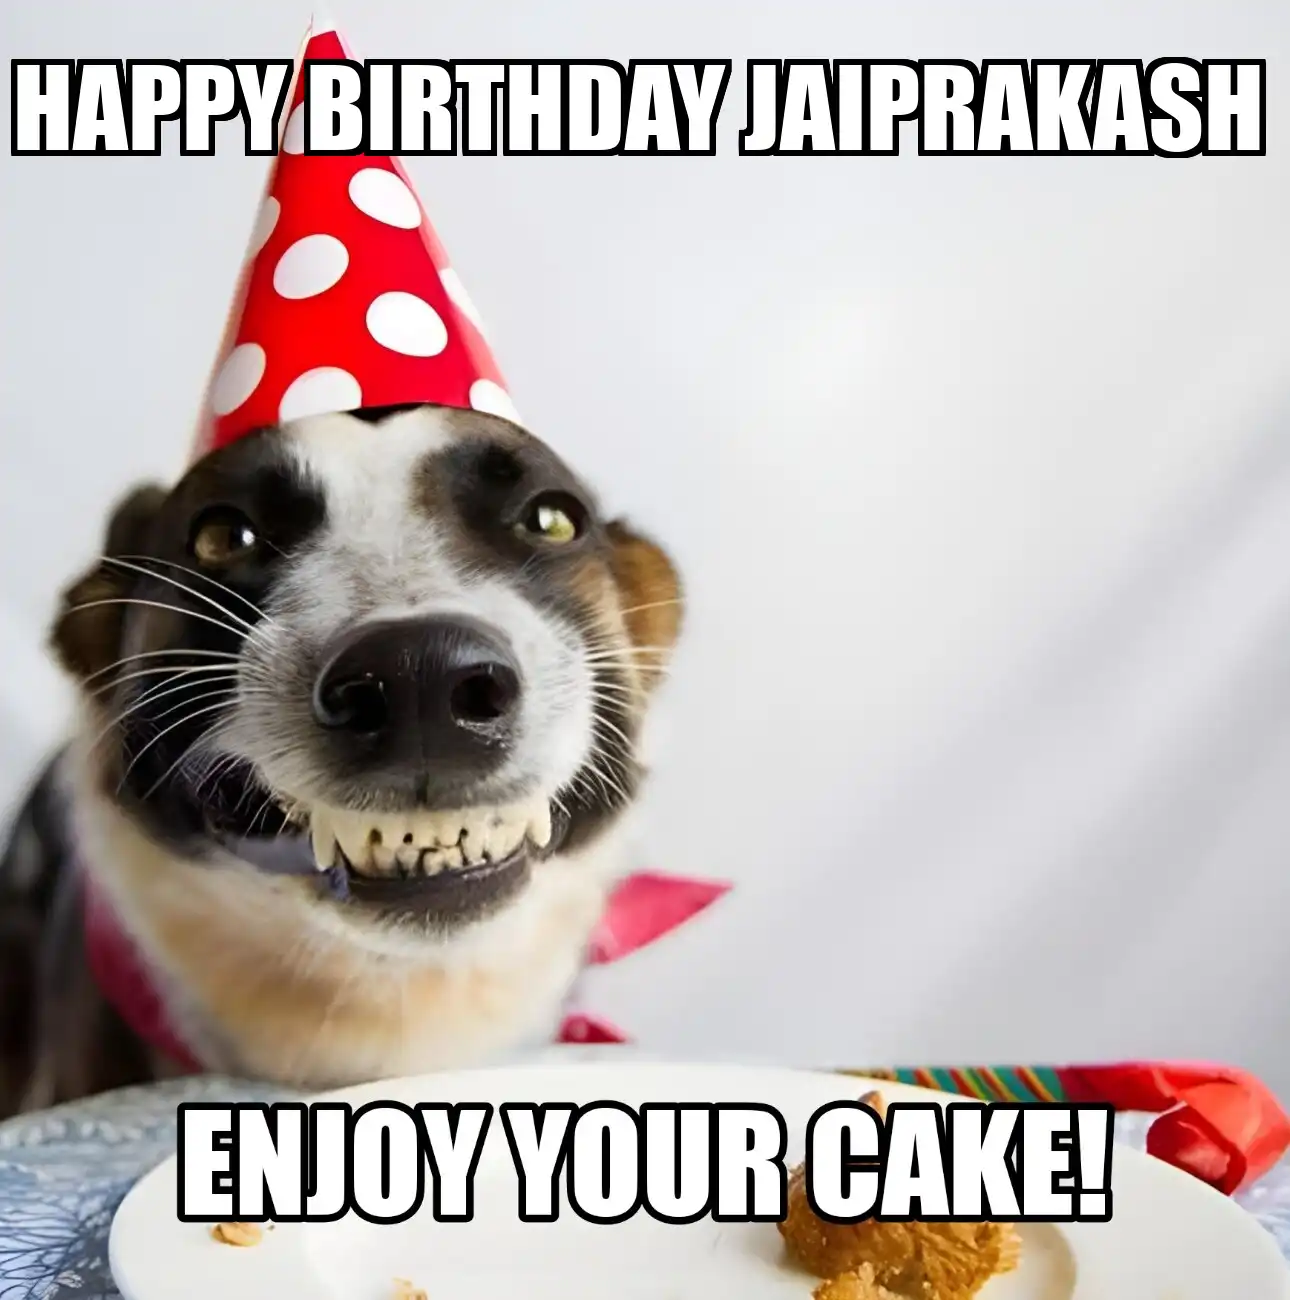 Happy Birthday Jaiprakash Enjoy Your Cake Dog Meme